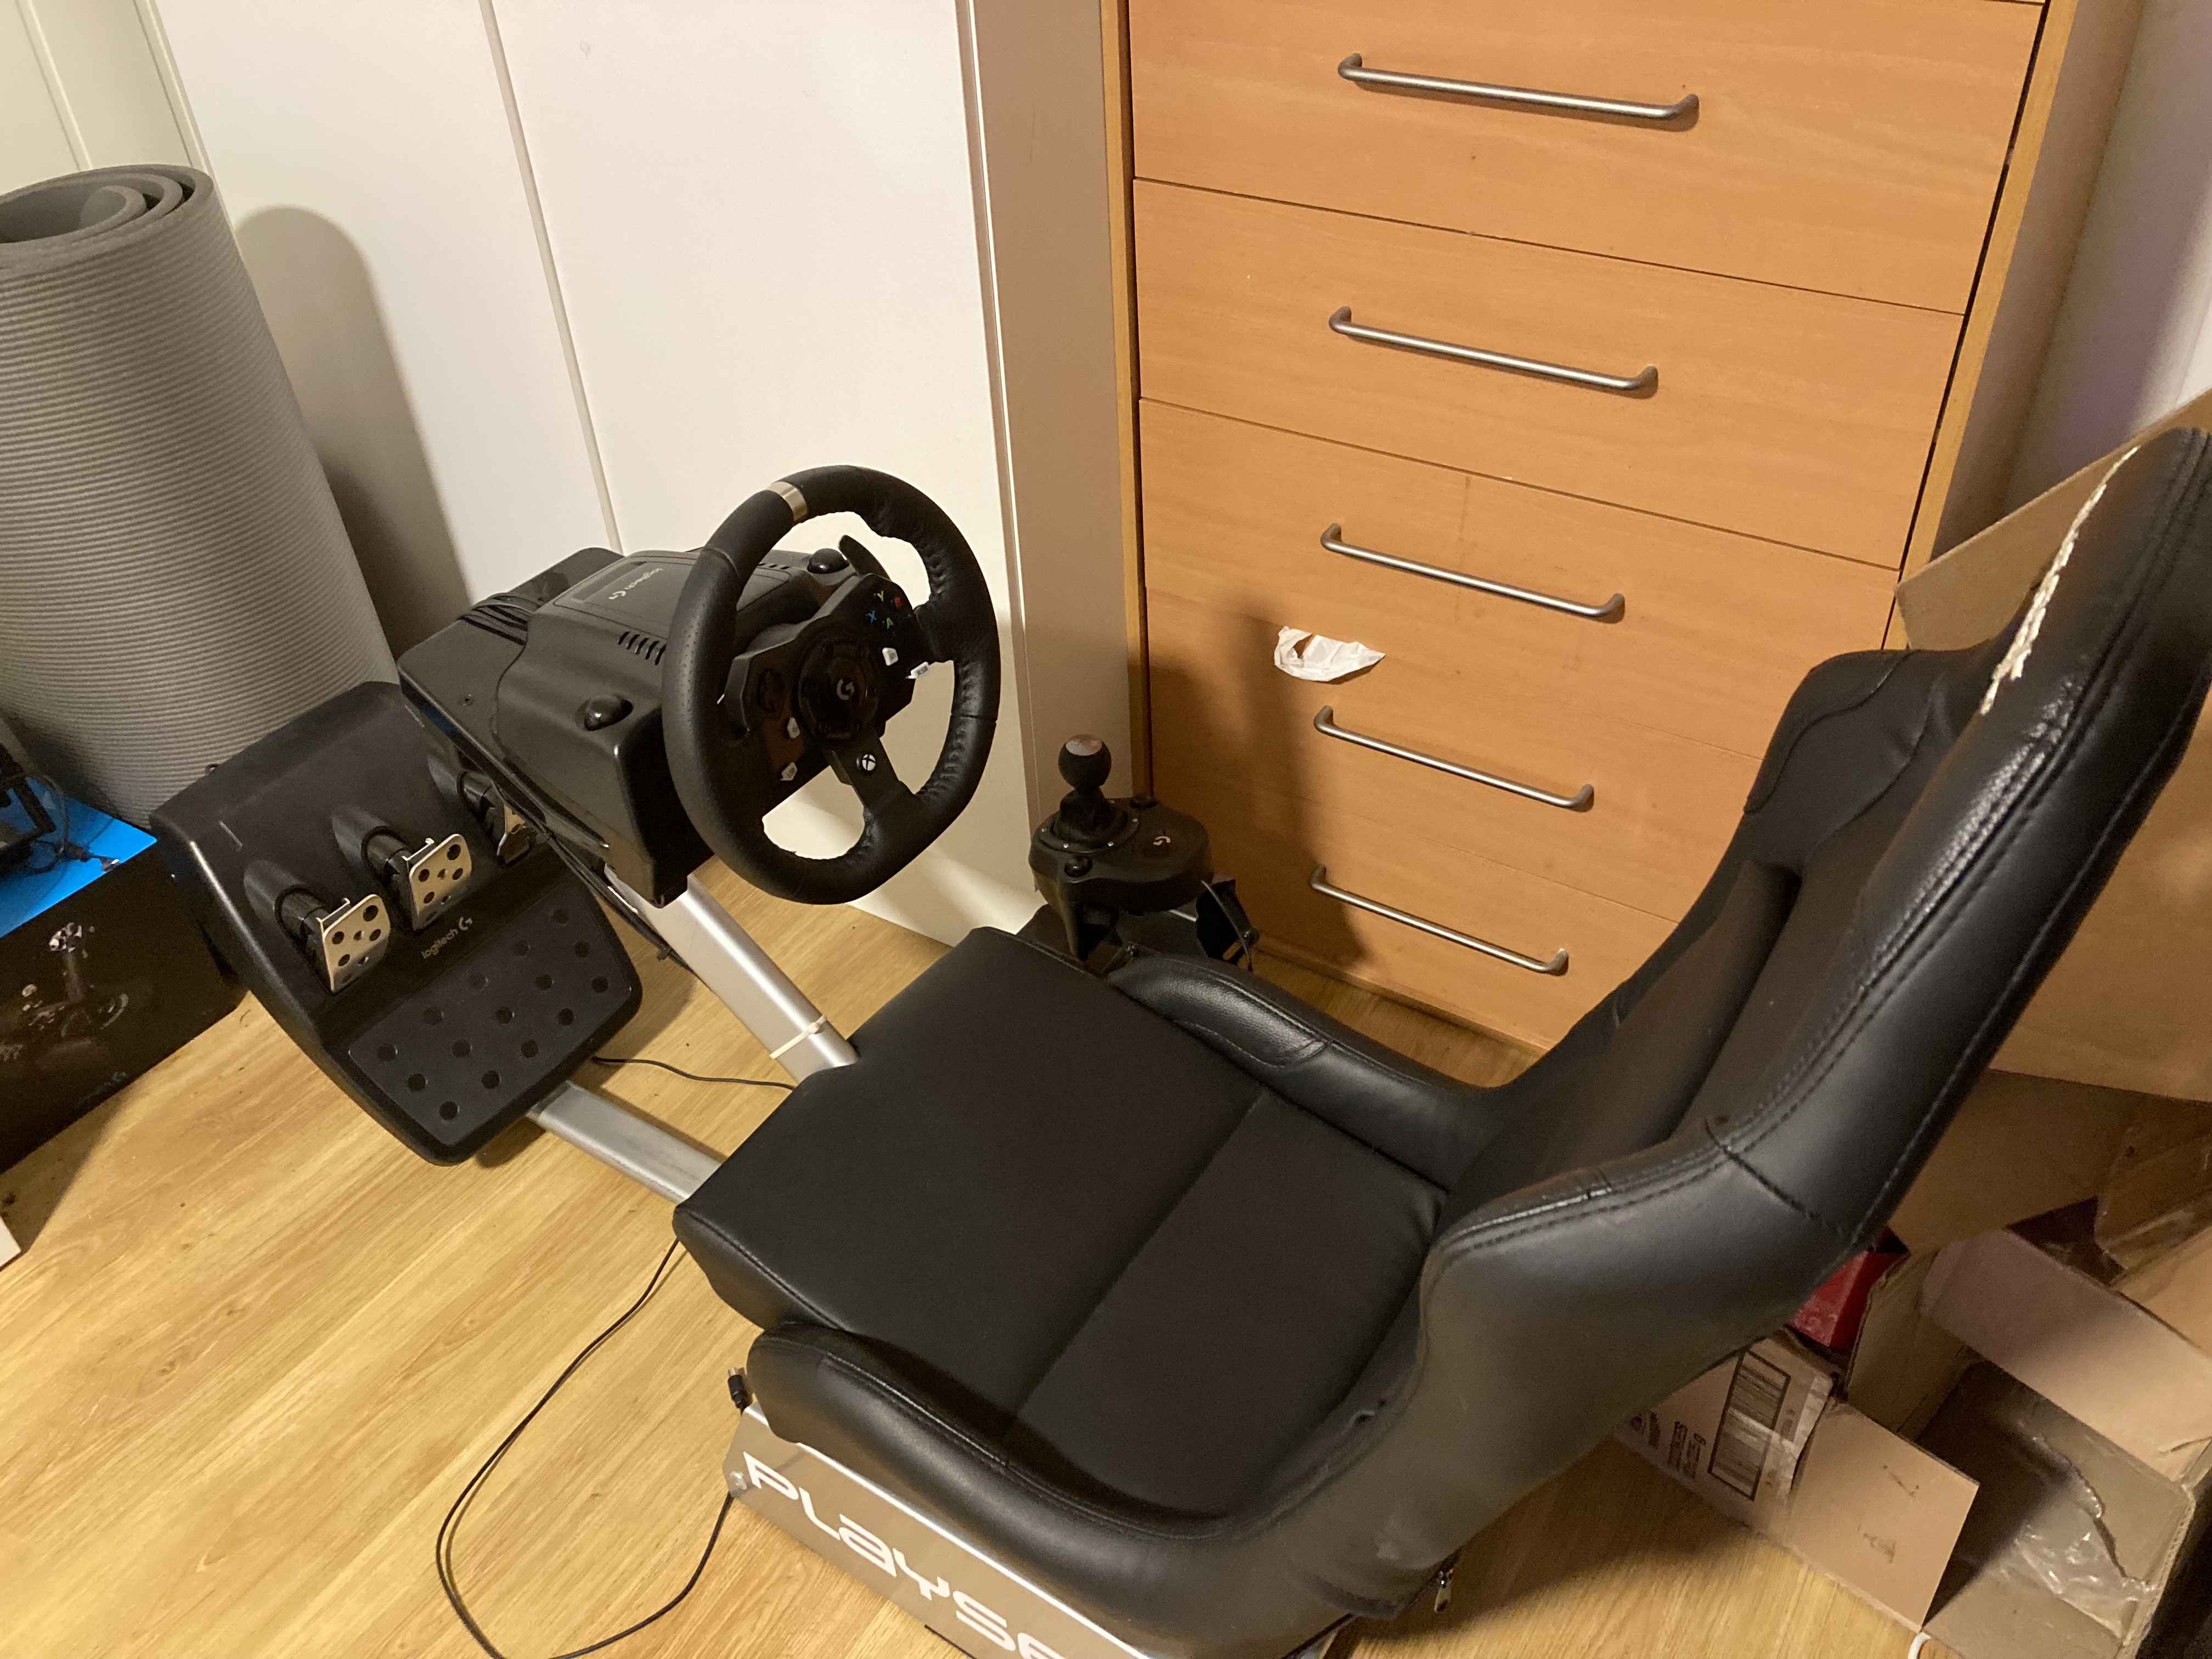 Logitech announces the Playseat Challenge X racing sim chair